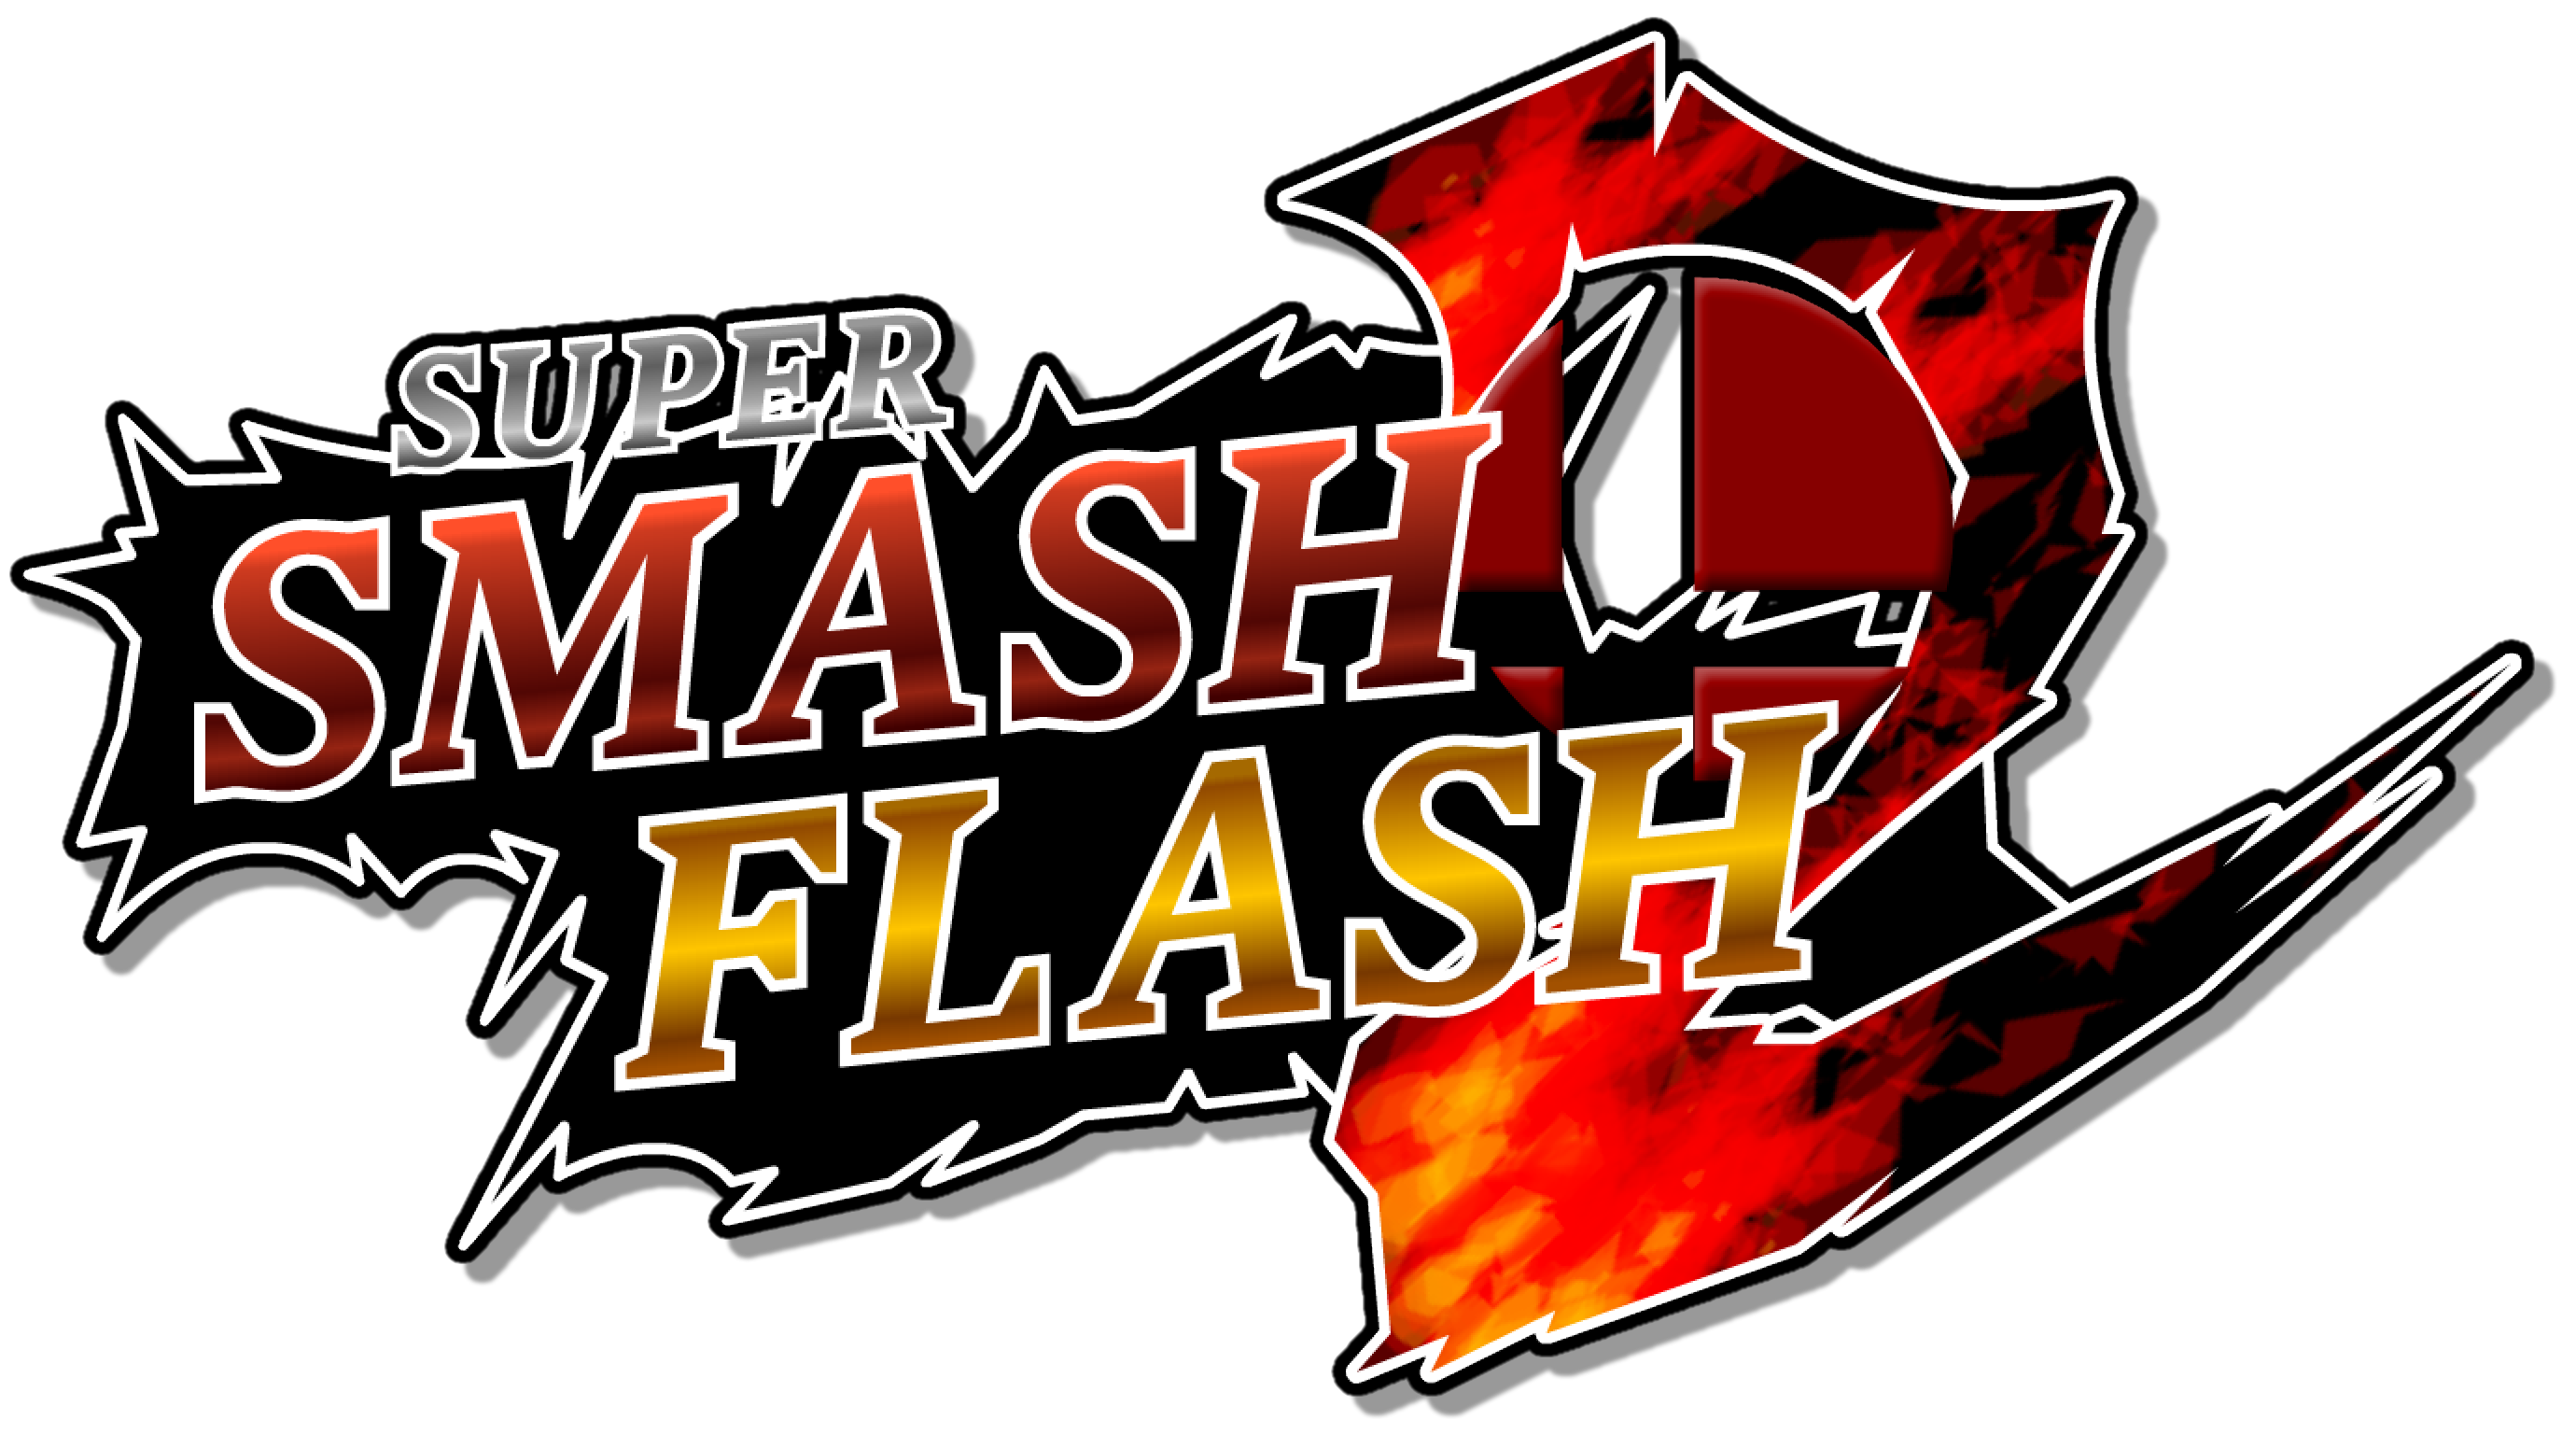 super smash flash 2 beta vegeta